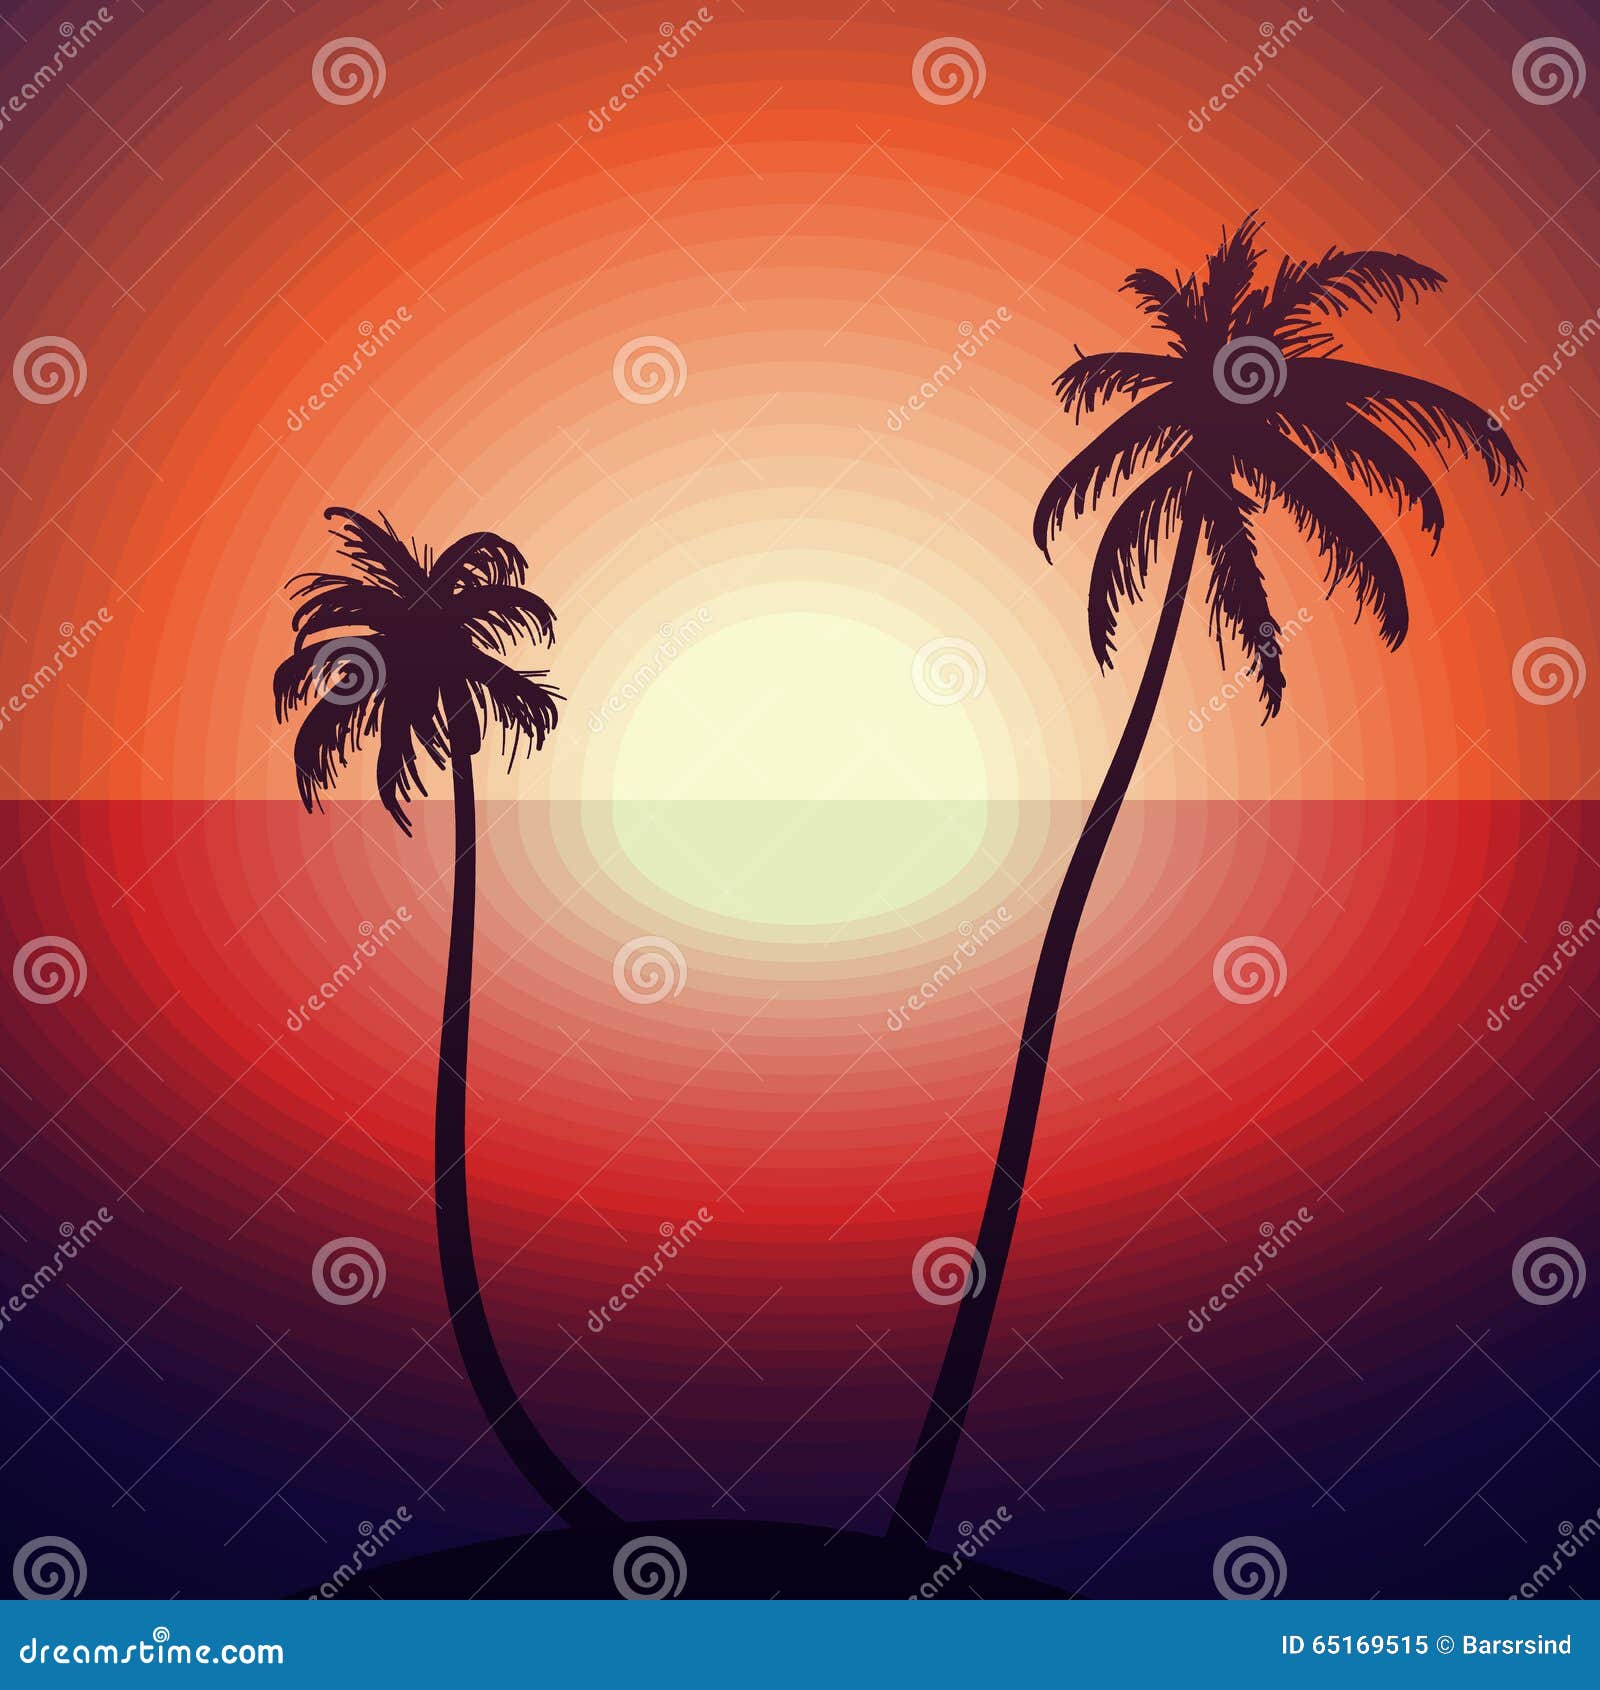 Tropical sunset with palms stock illustration. Illustration of sunrise ...